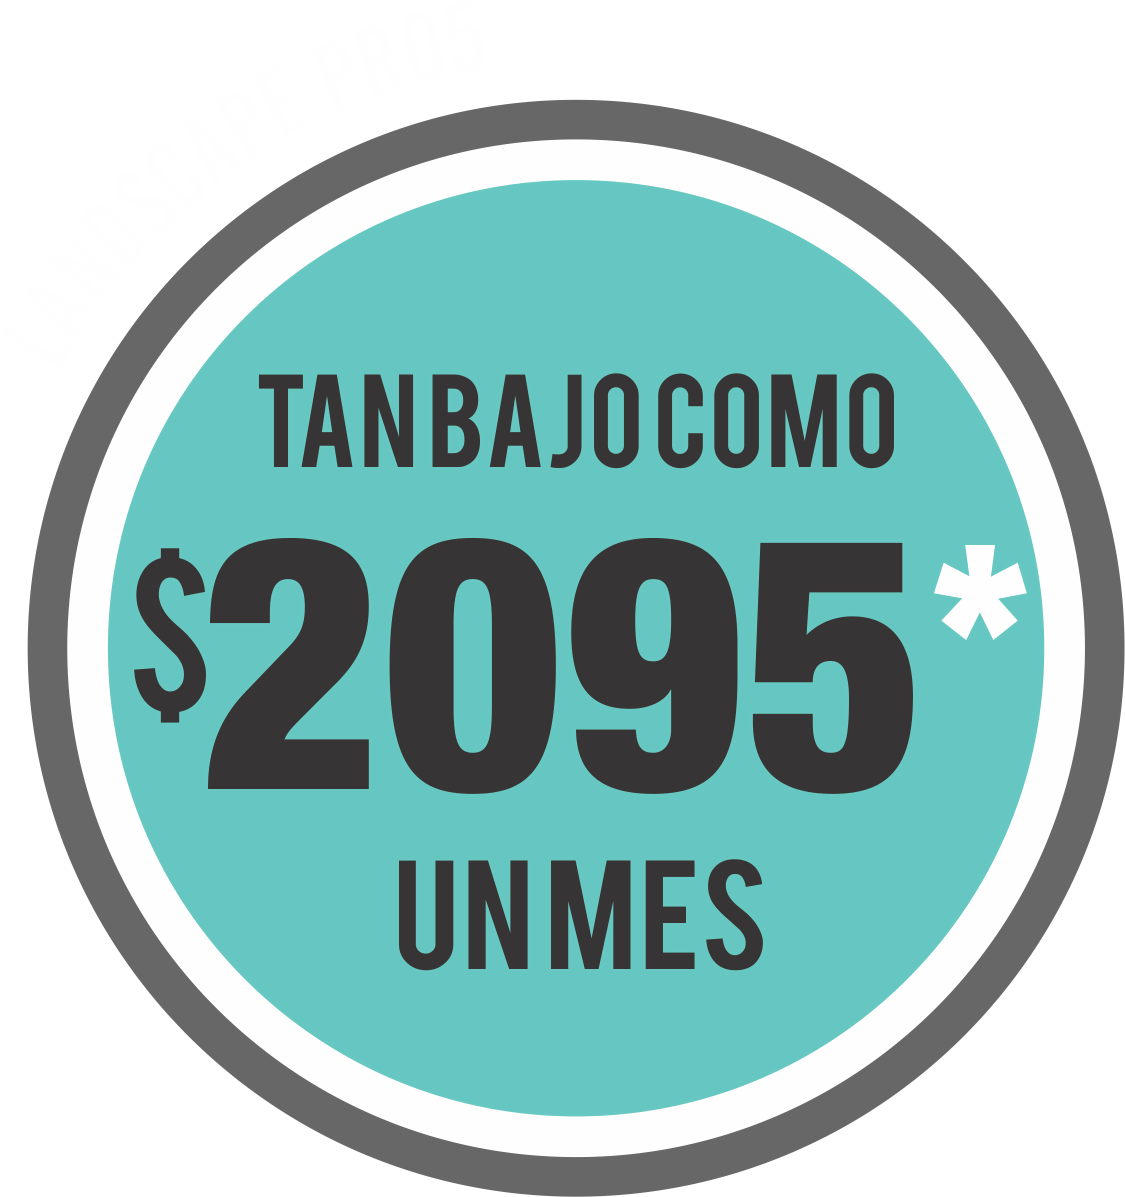 Landscape Pro 5 tanbajocomo $2095 unmes